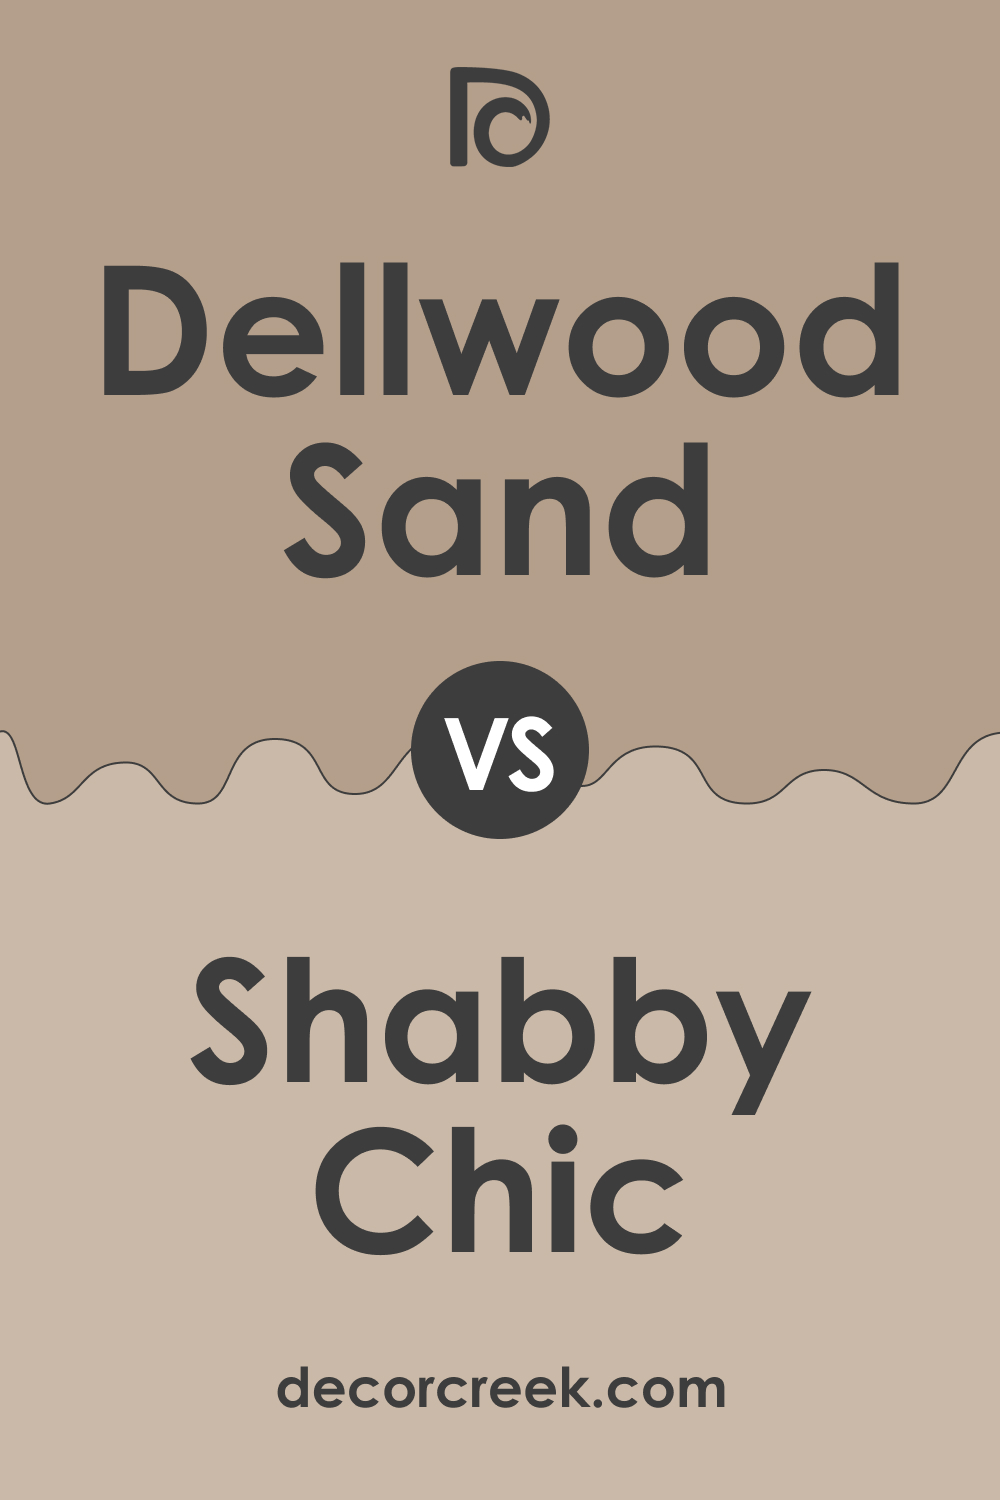 Dellwood Sand 1019 vs. BM 1018 Shabby Chic